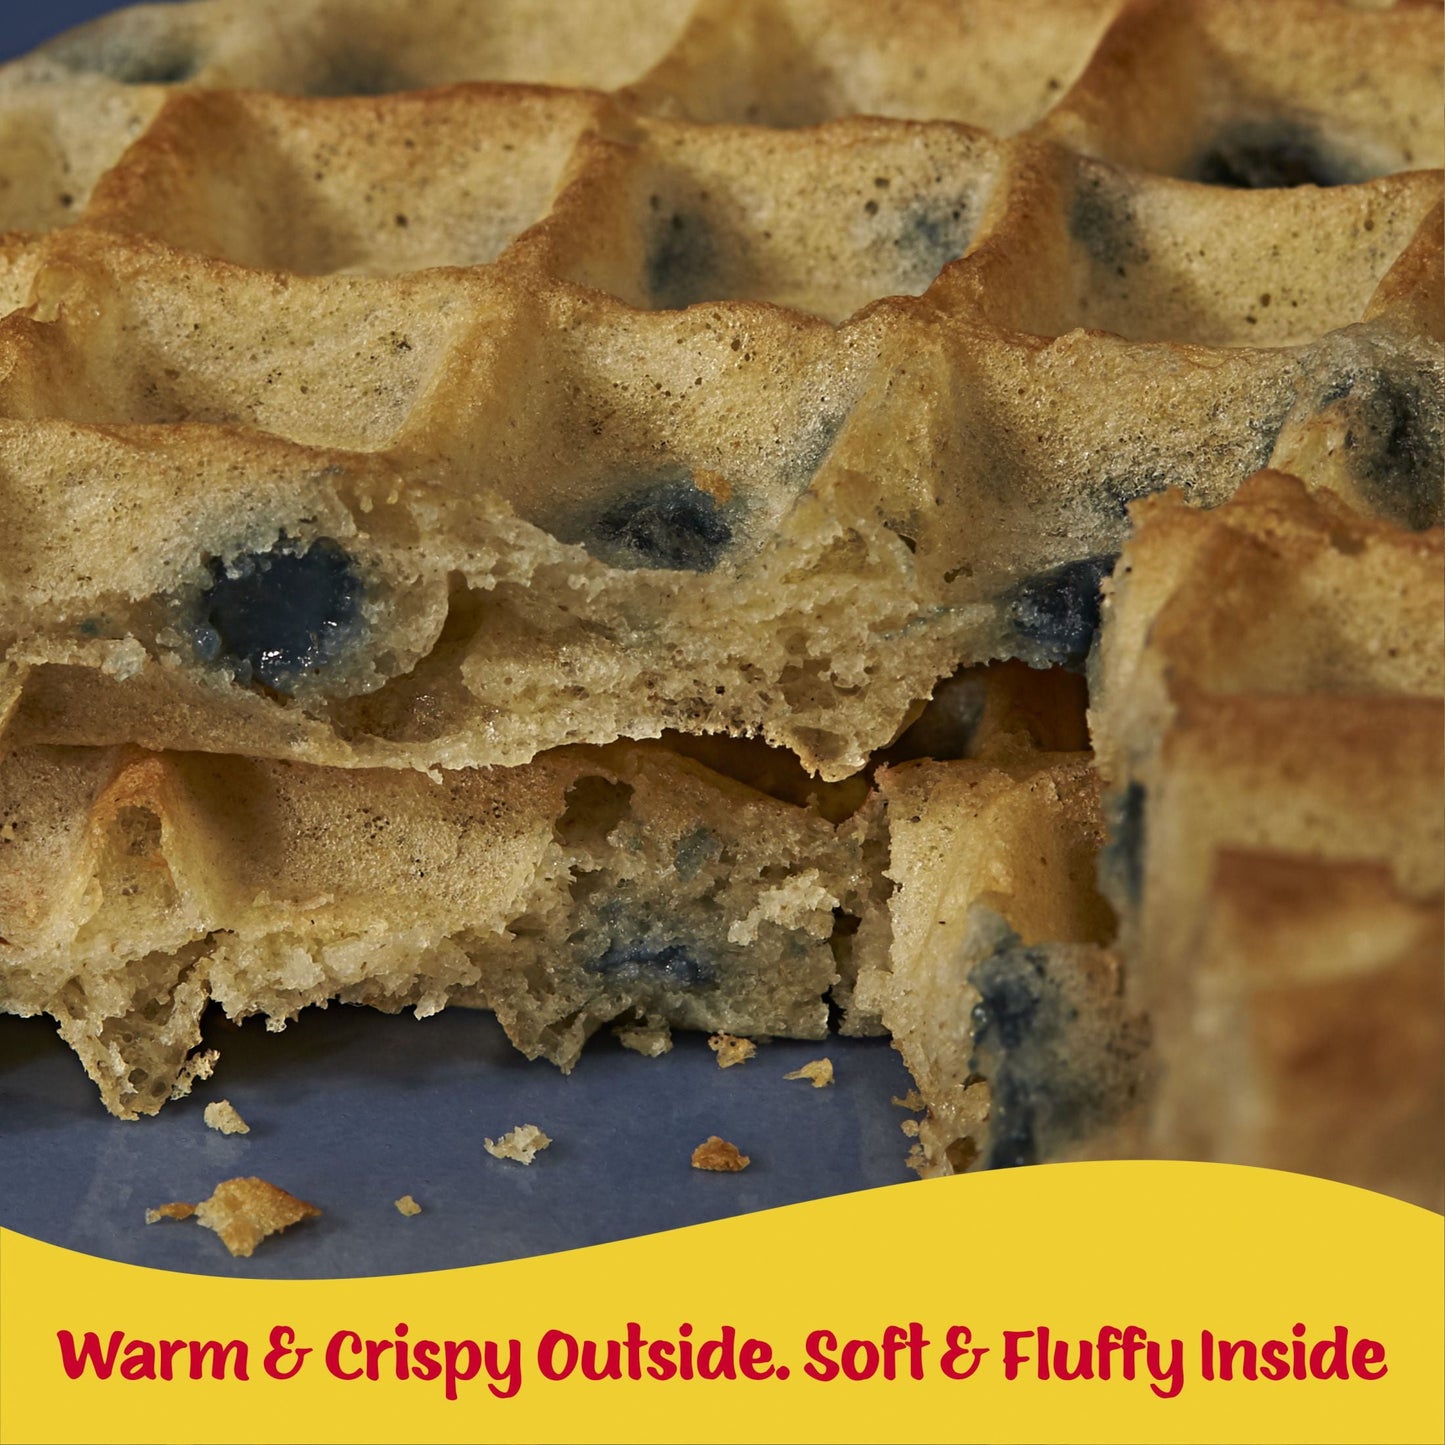 Eggo Blueberry Waffles, 29.6 oz, 24 Count (Frozen)